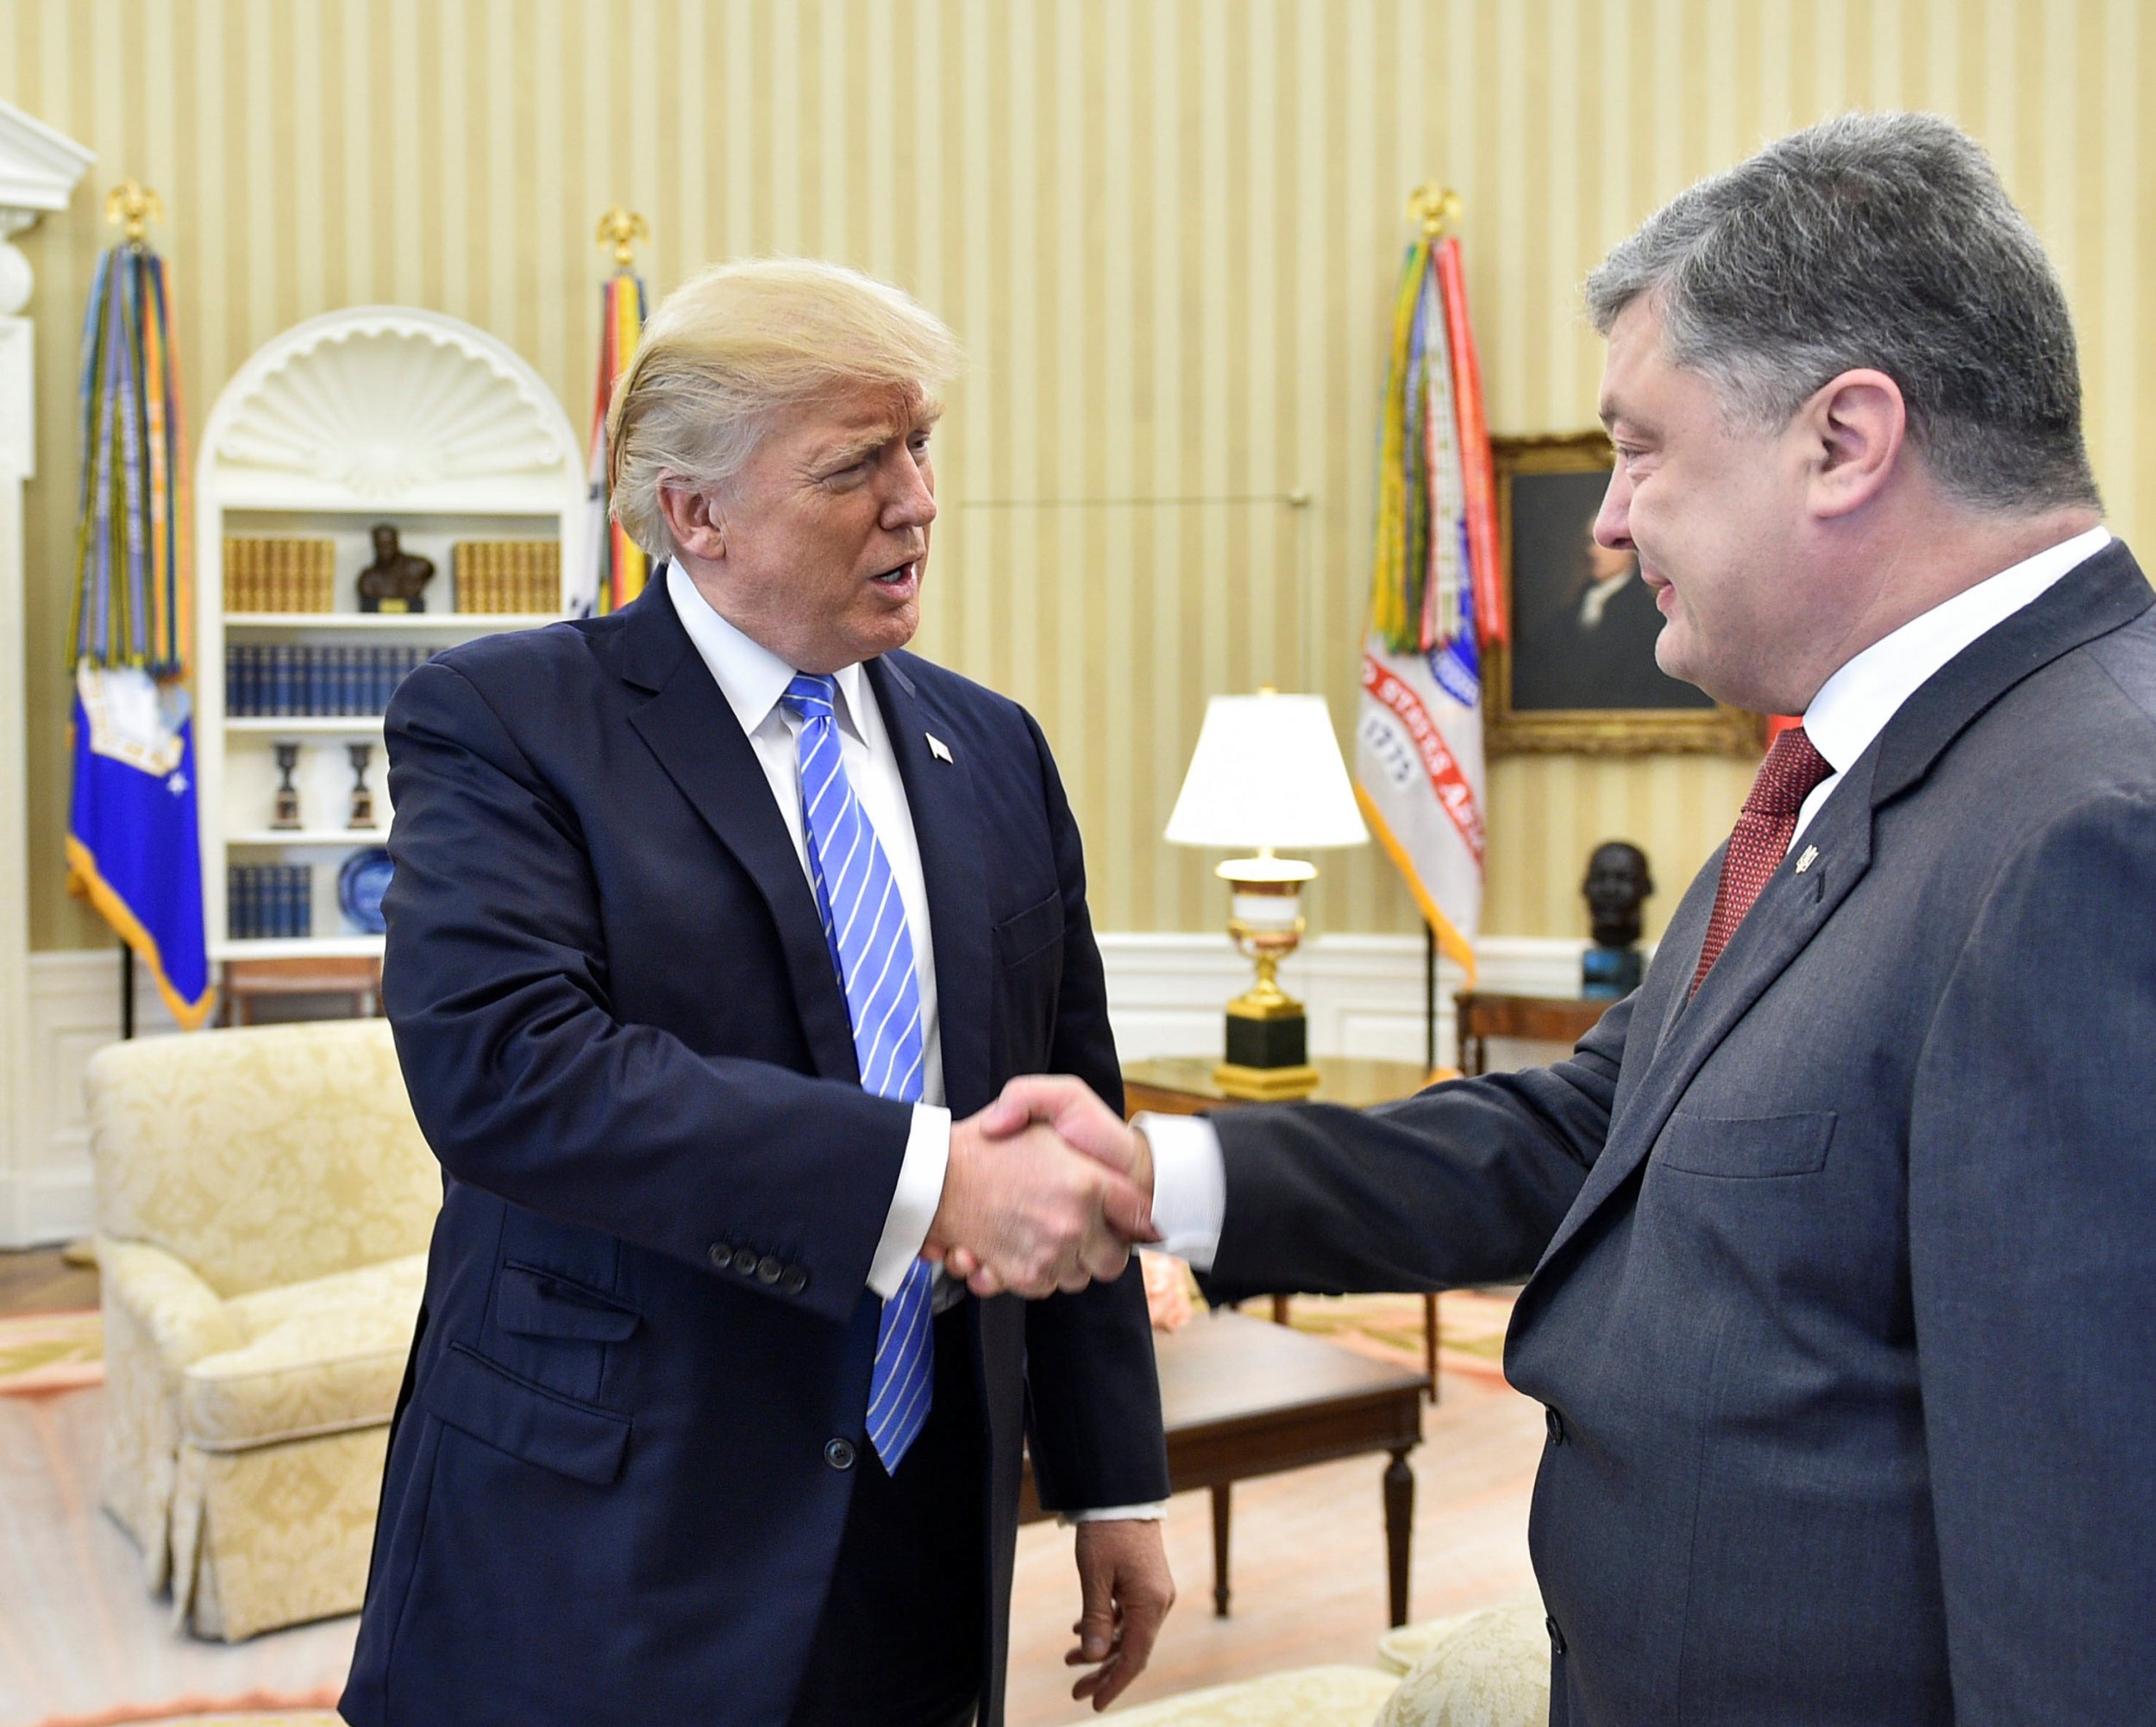 Trump and Poroshenko